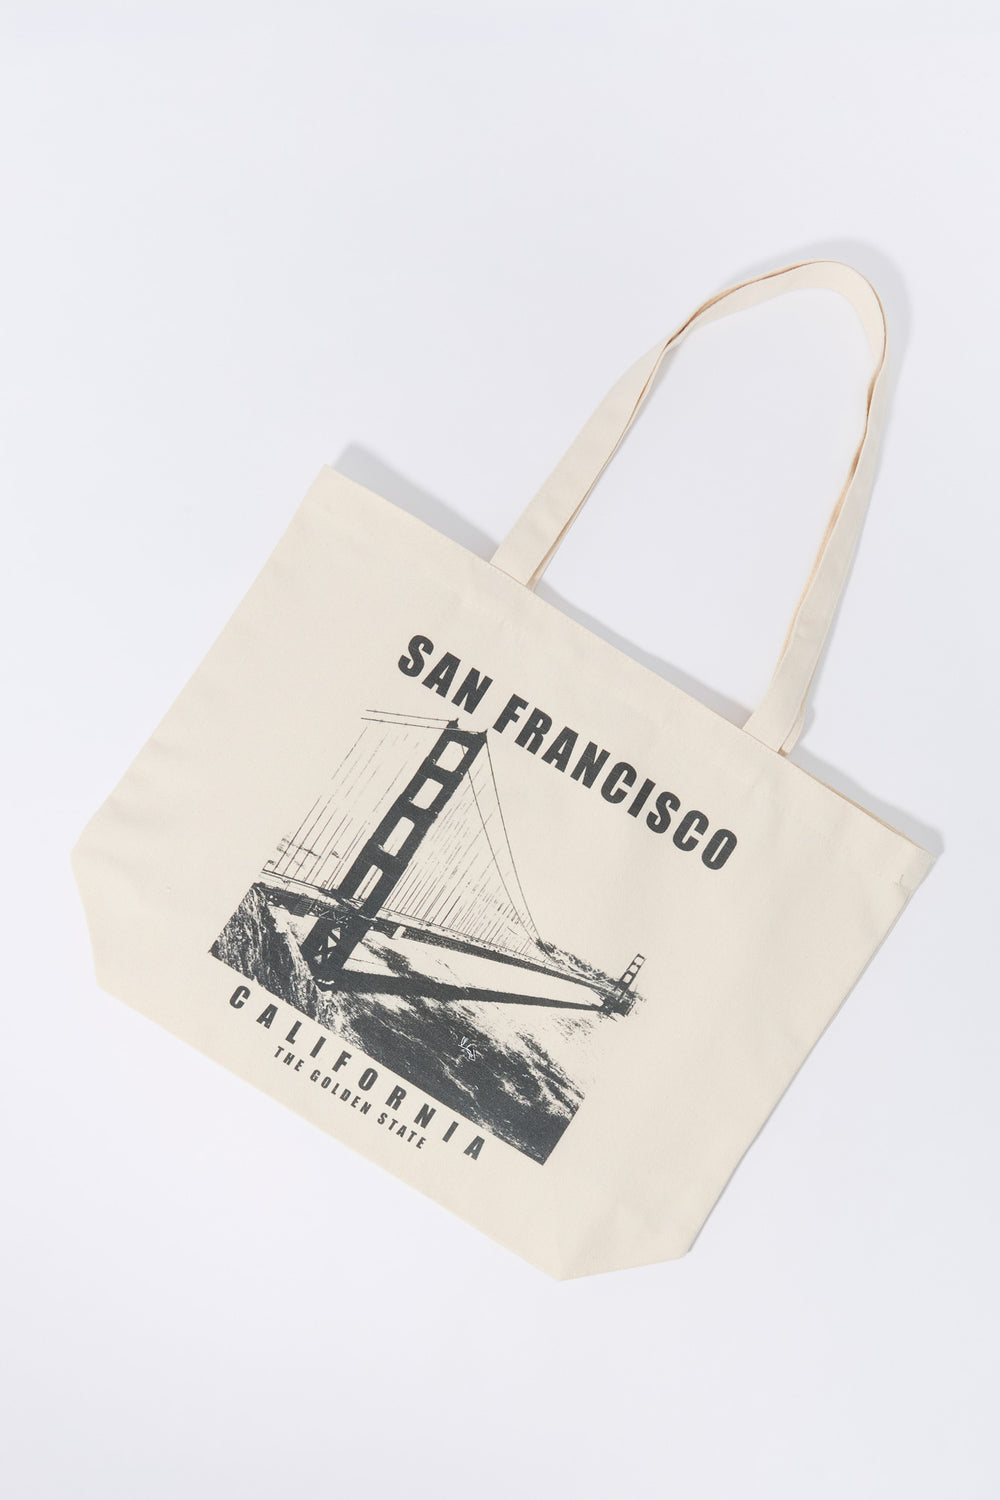 San Francisco Graphic Tote Bag San Francisco Graphic Tote Bag 1